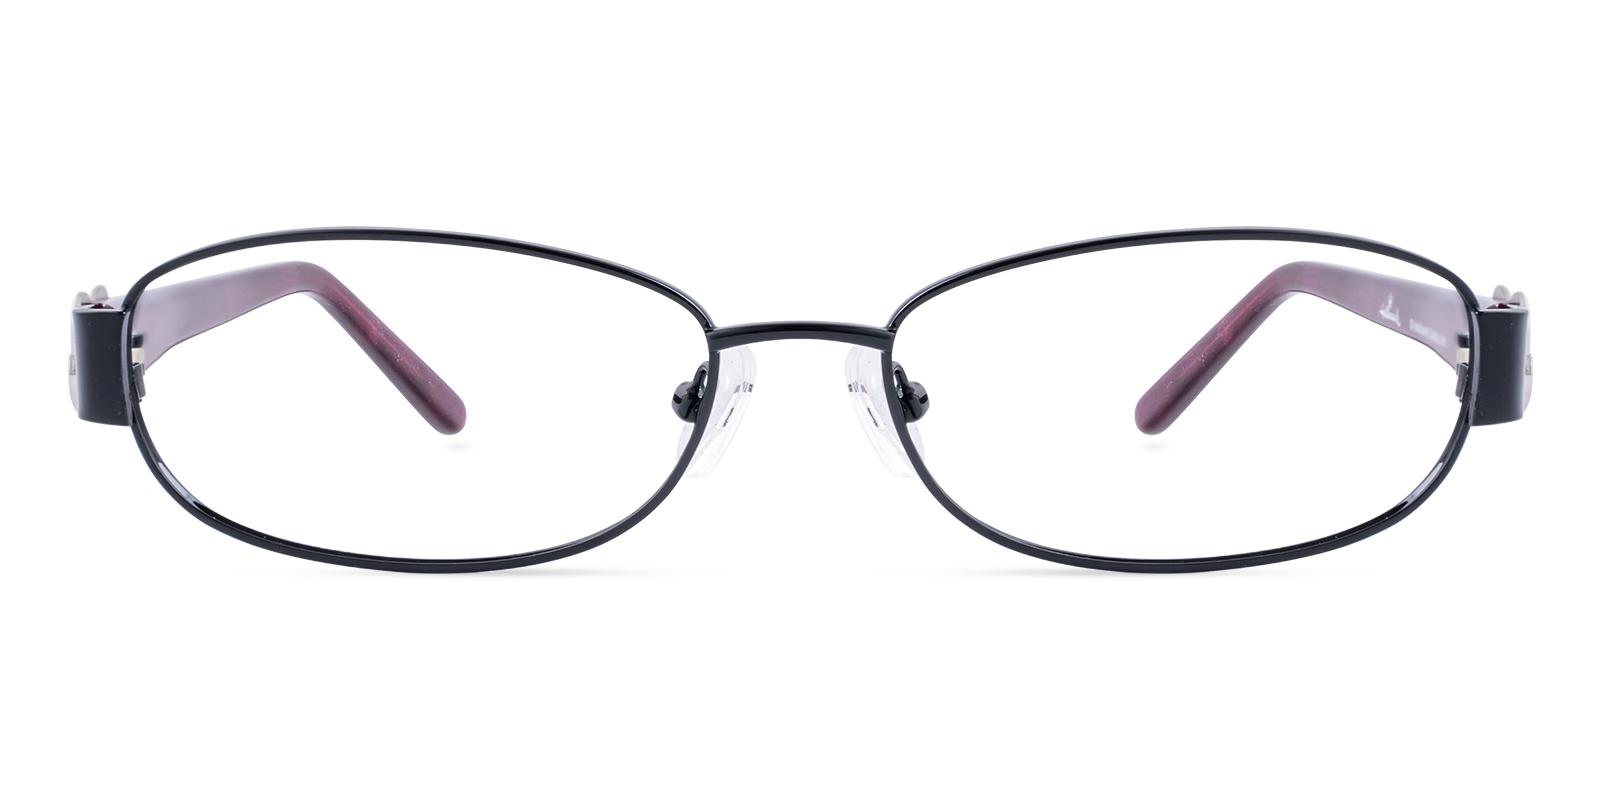 Muster Black Acetate , Metal Eyeglasses , NosePads Frames from ABBE Glasses